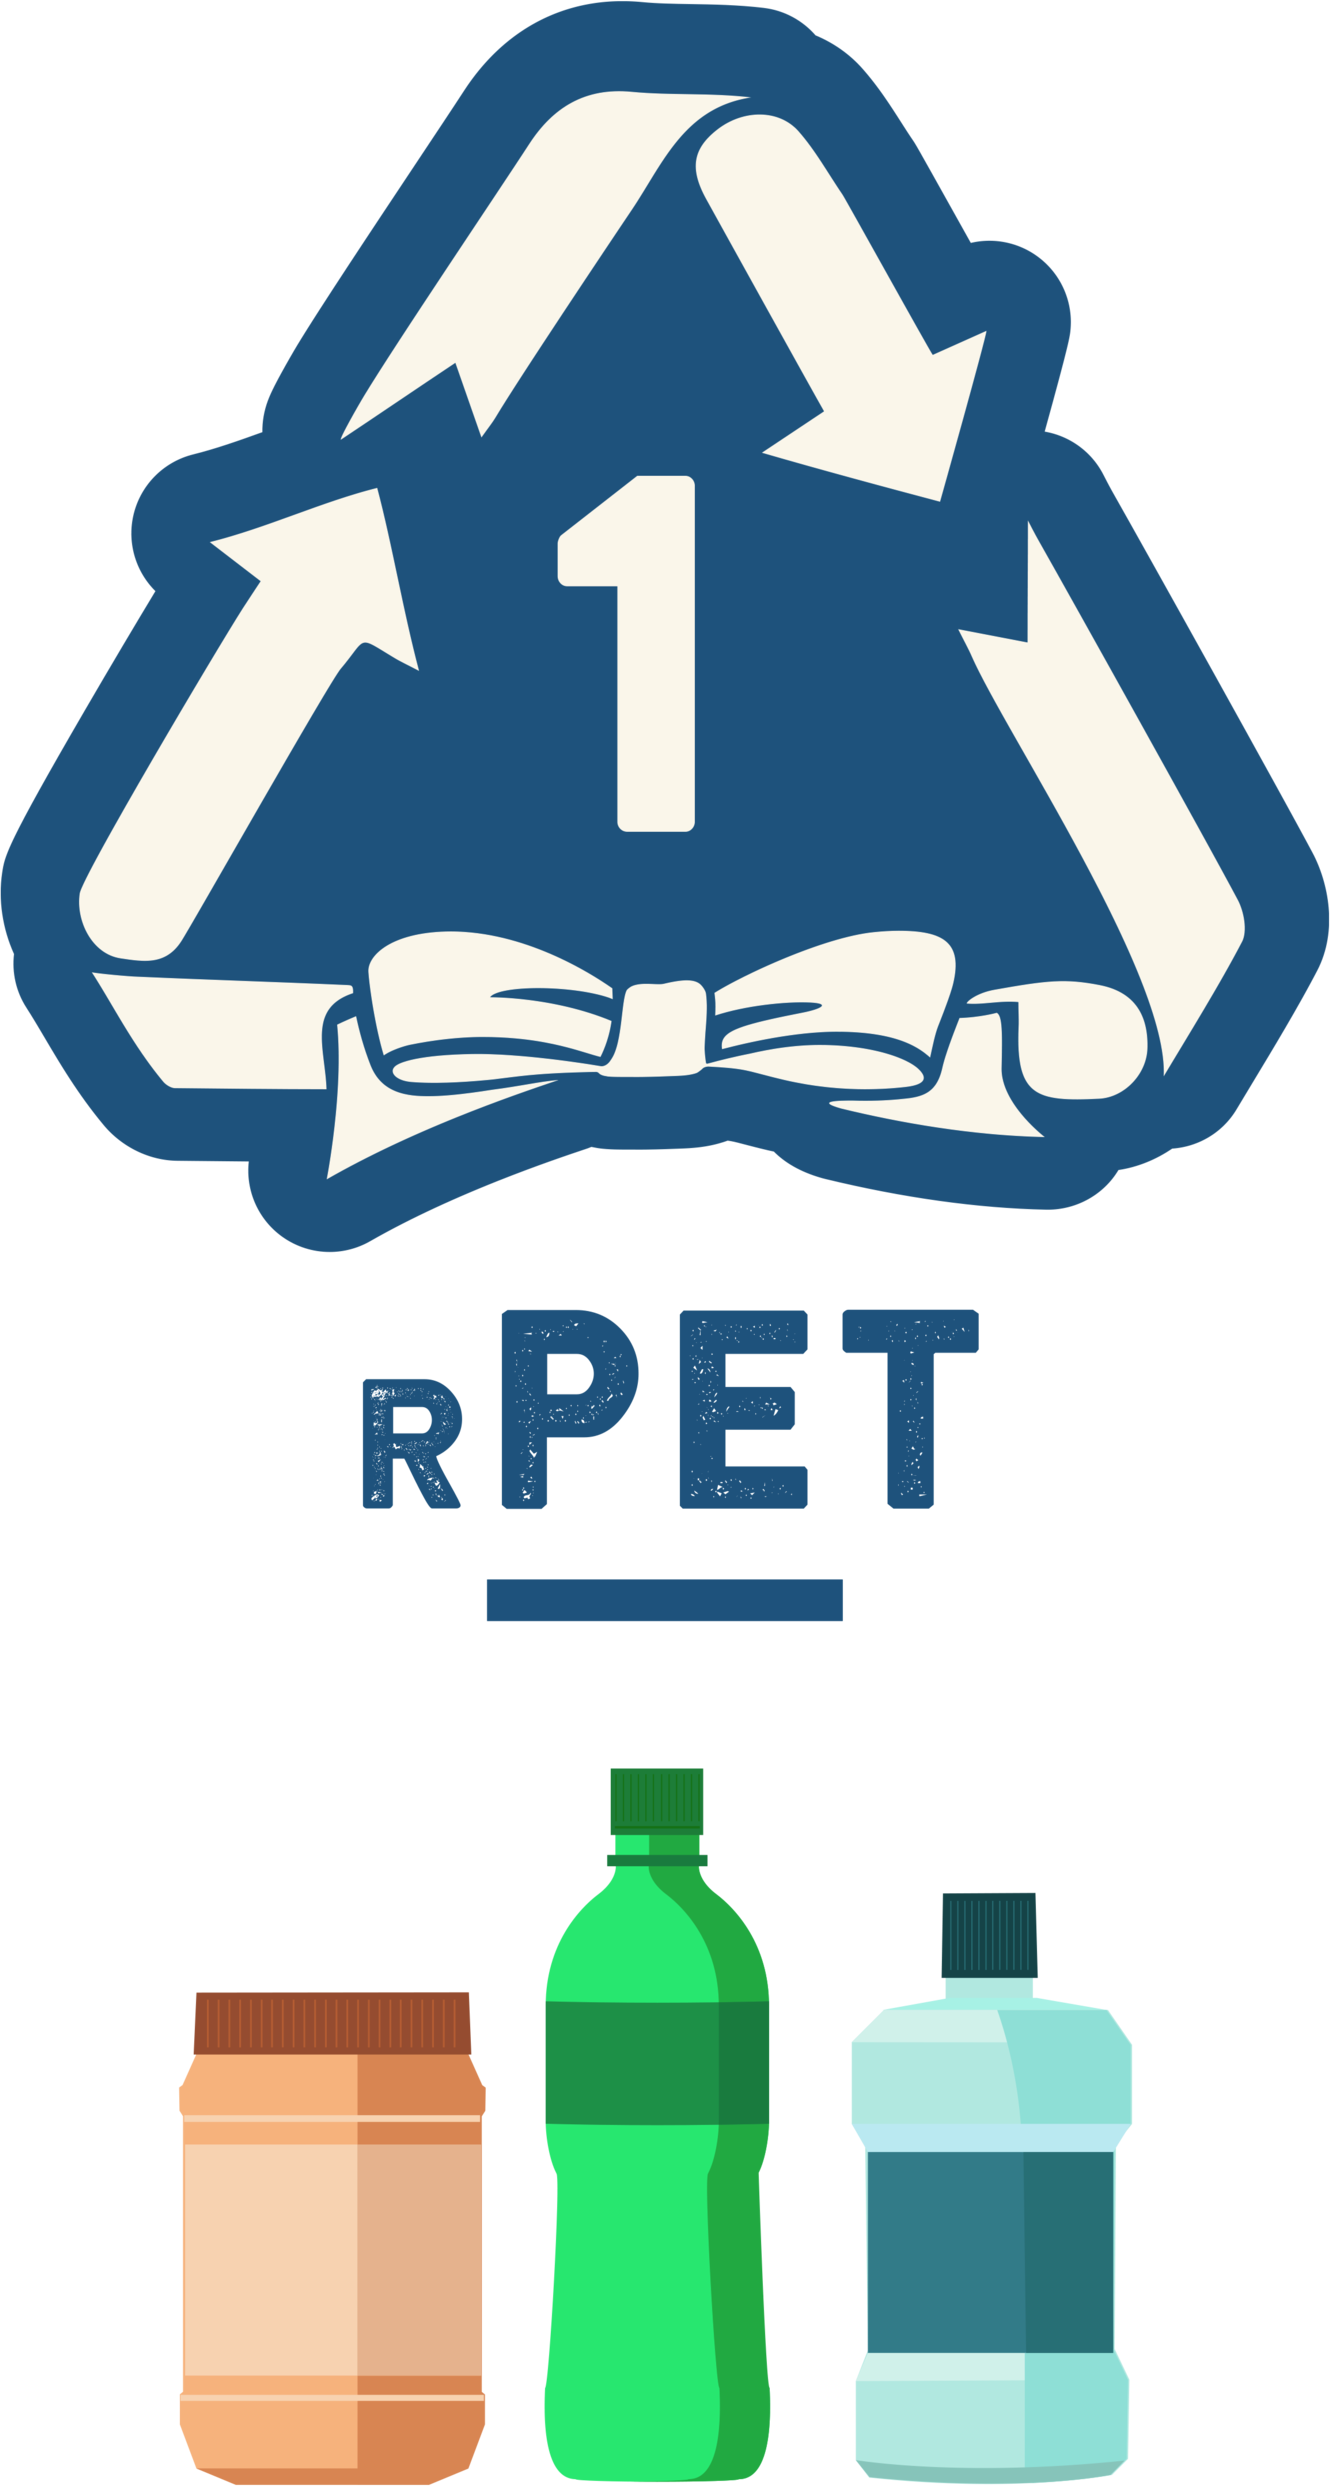 rPET = Recycled Polyethylene Terephthalate